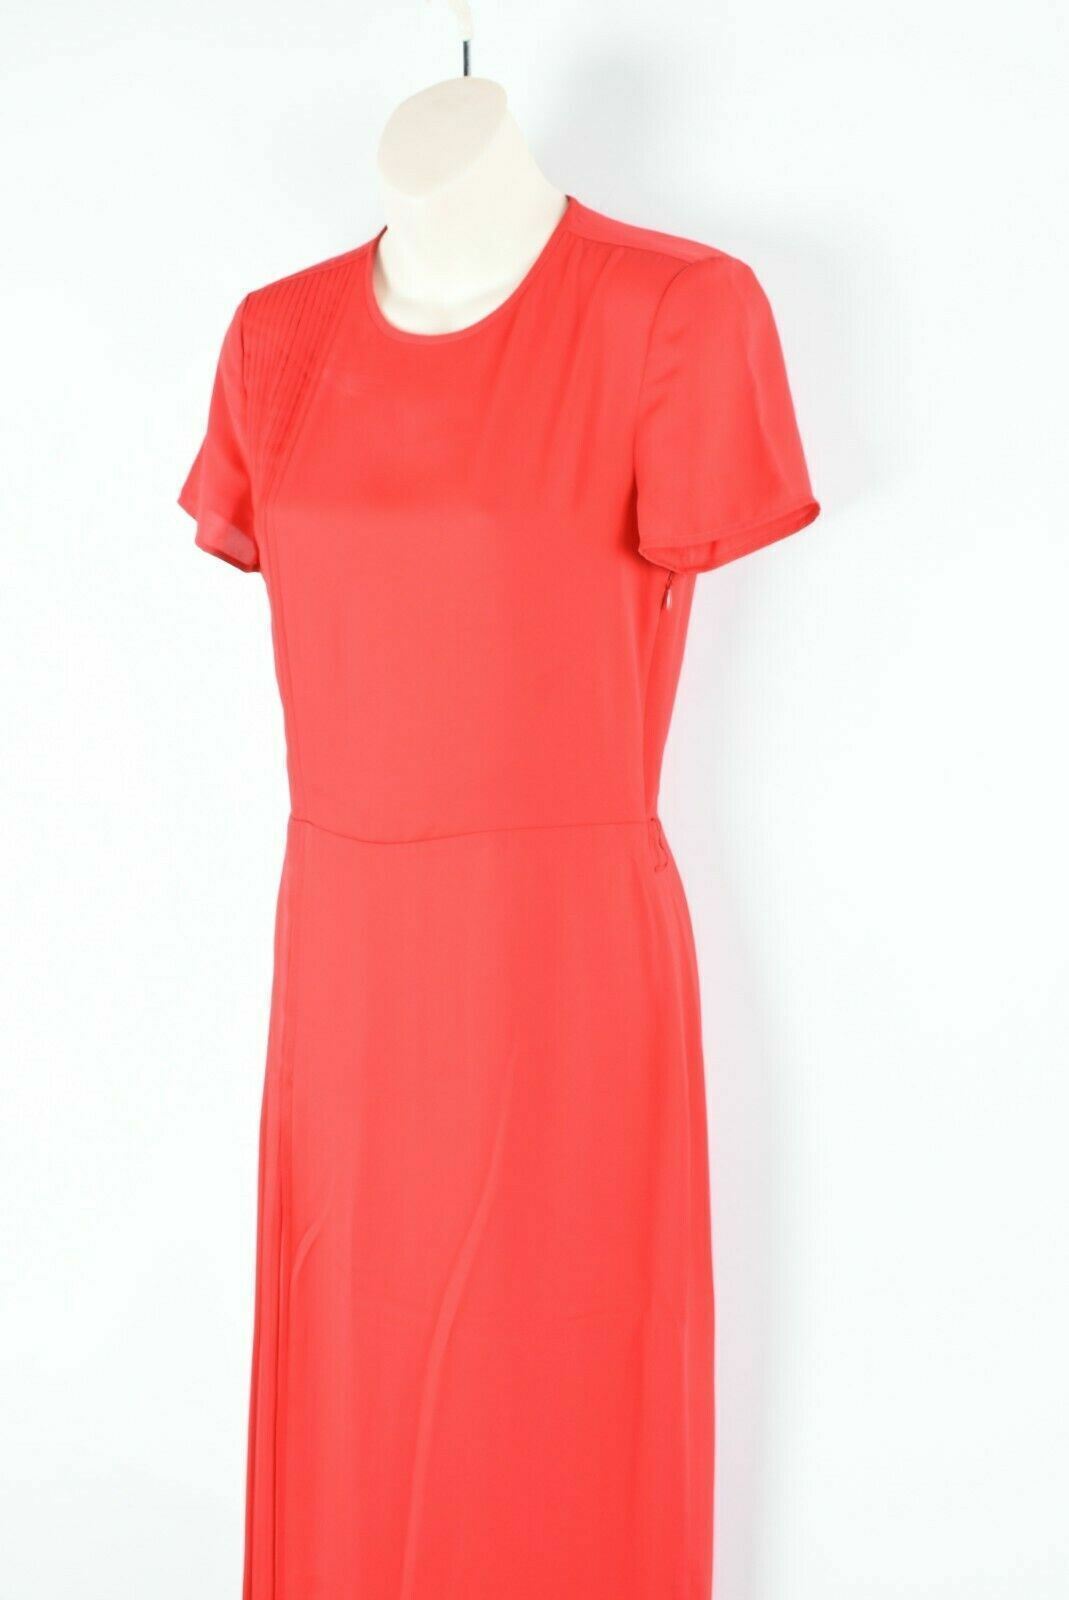 TOMMY HILFIGER Women's NALISE Red Long Maxi Dress, size UK 6 to UK 8